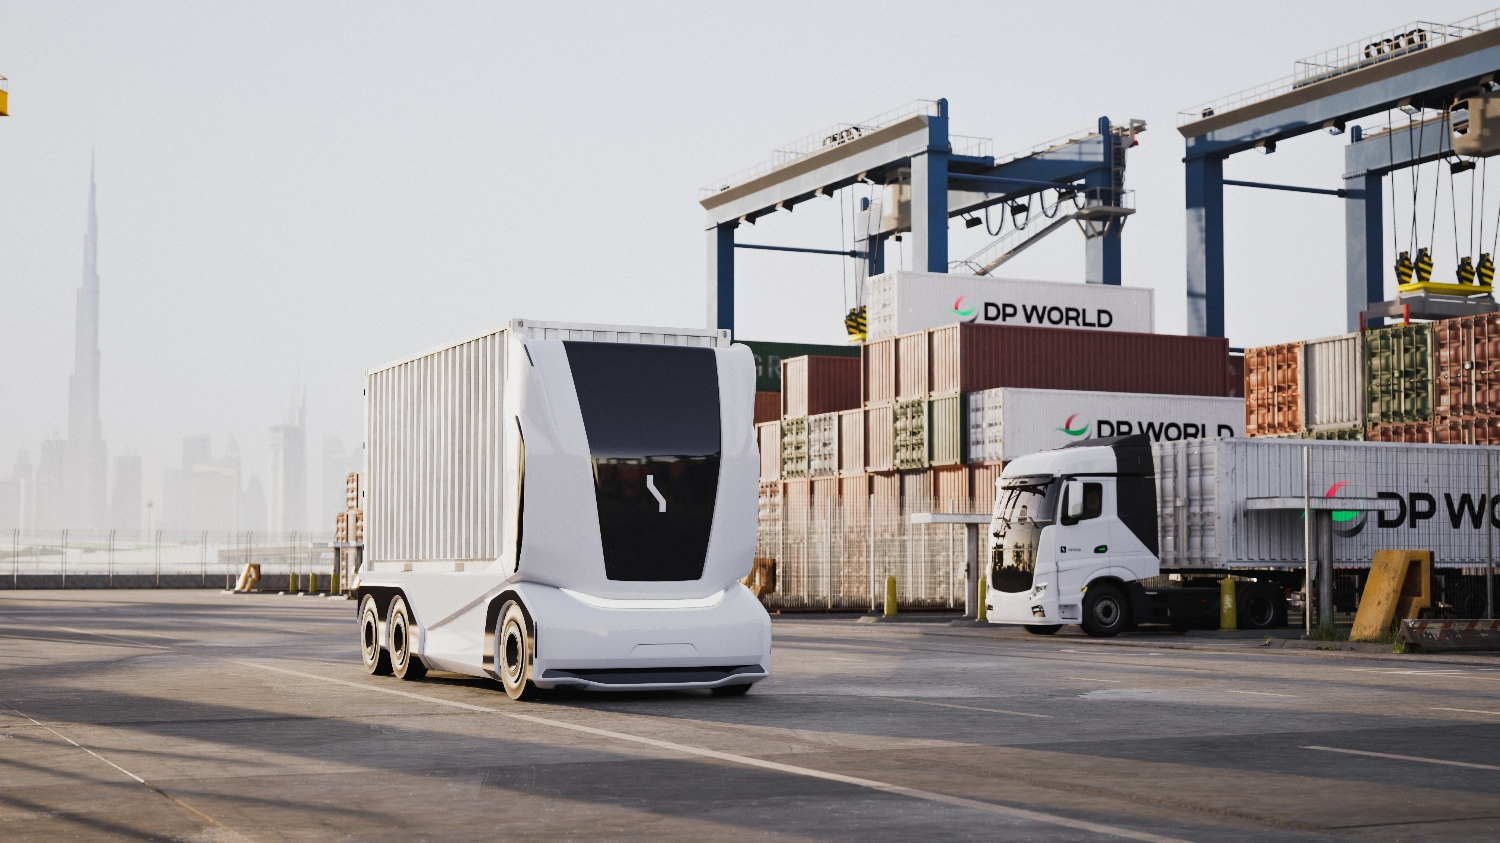 Einride starts building ‘world’s largest’ autonomous trucking network in Dubai